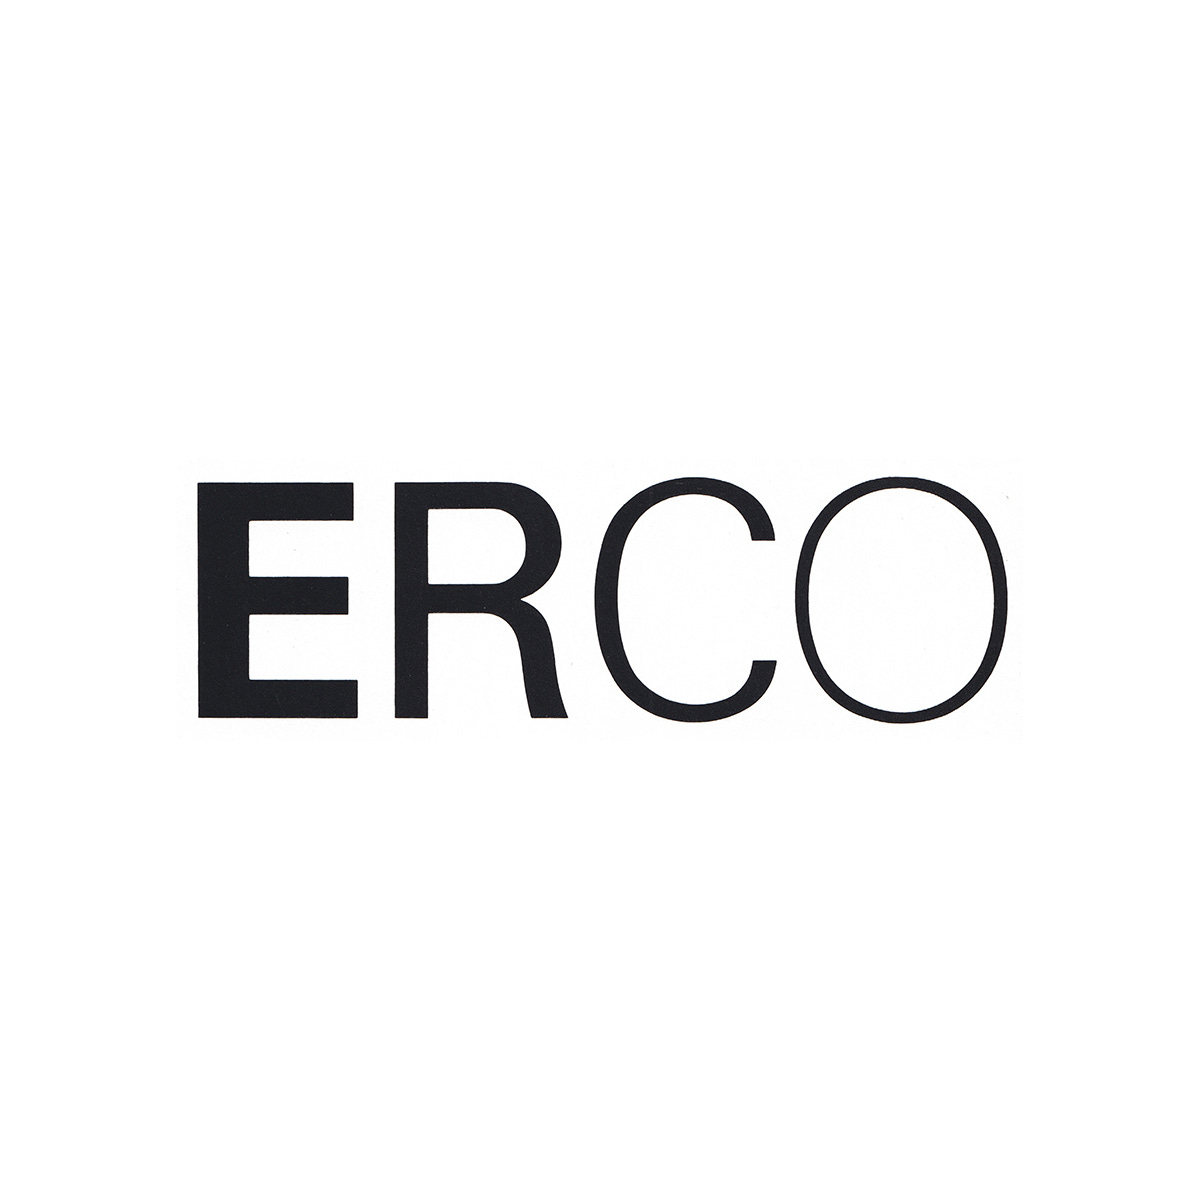 Otl Aicher's logo for German lighting company ERCO